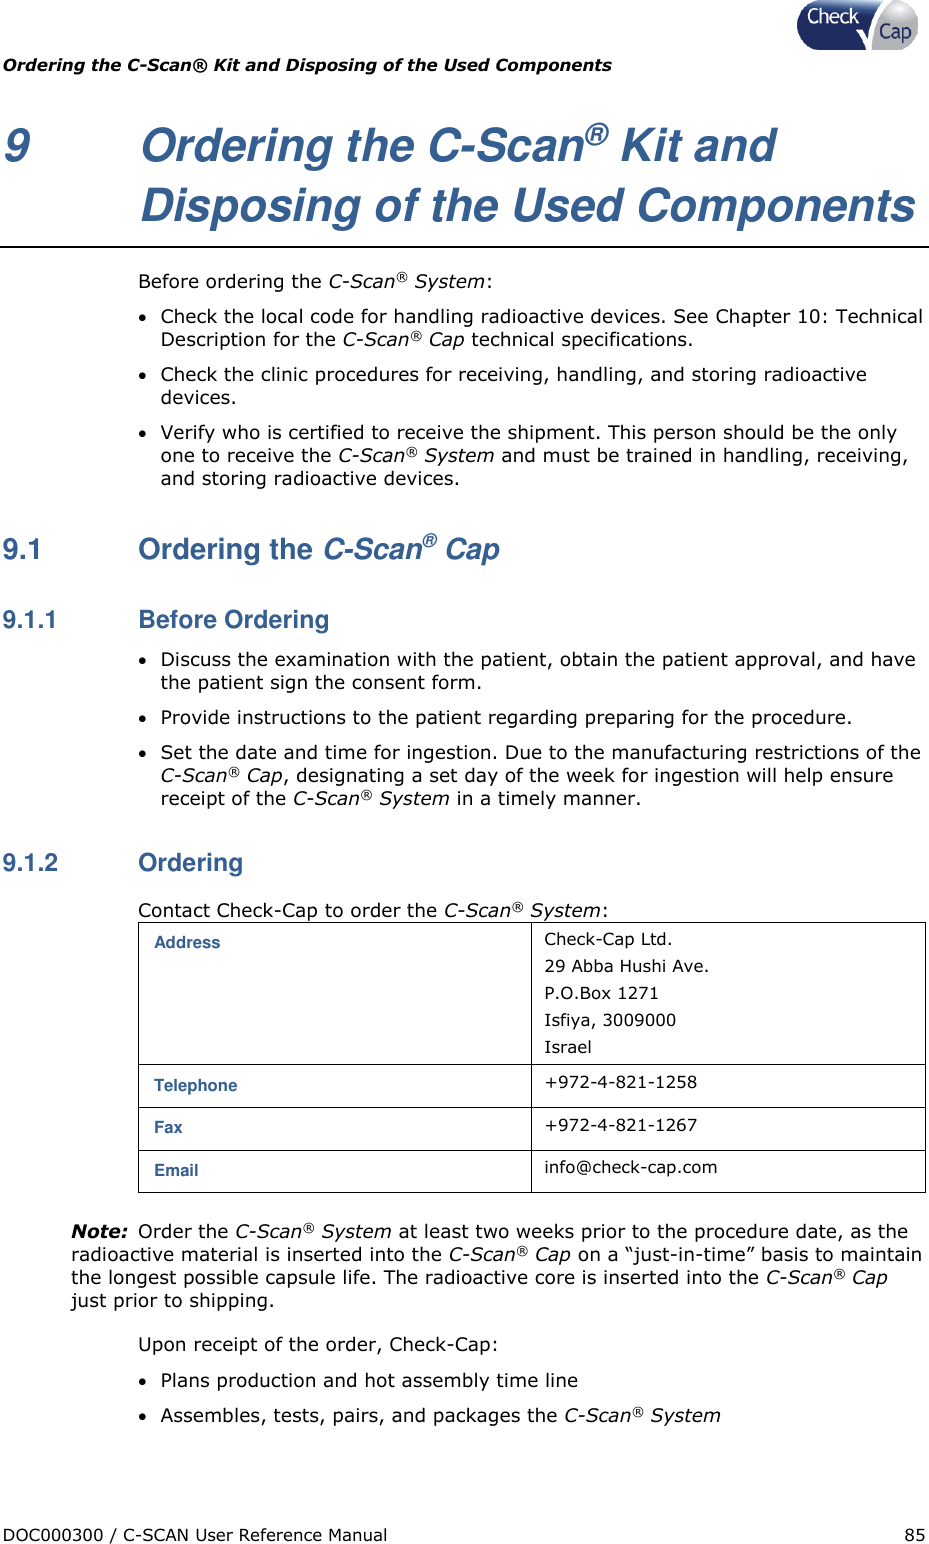 Page 85 of Check Cap CAP10007506 C-Scan Cap transceiver User Manual Title